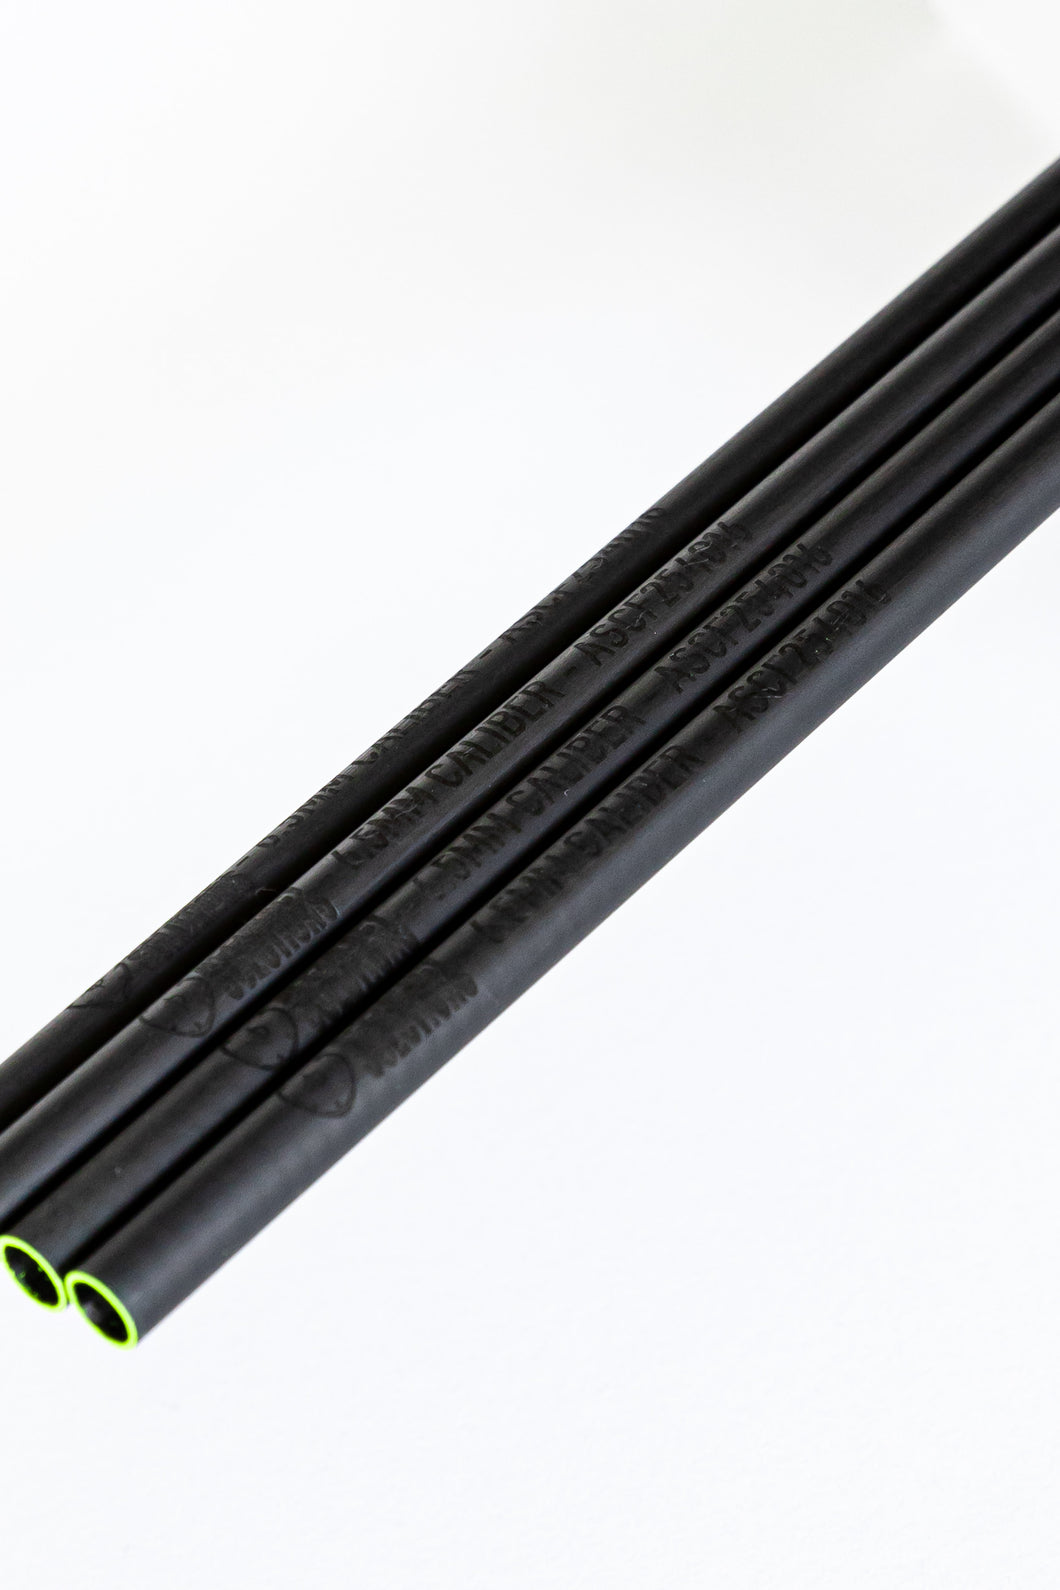 6.5MM Grendel Creedmoor Carbon Fiber Bore Alignment Rod